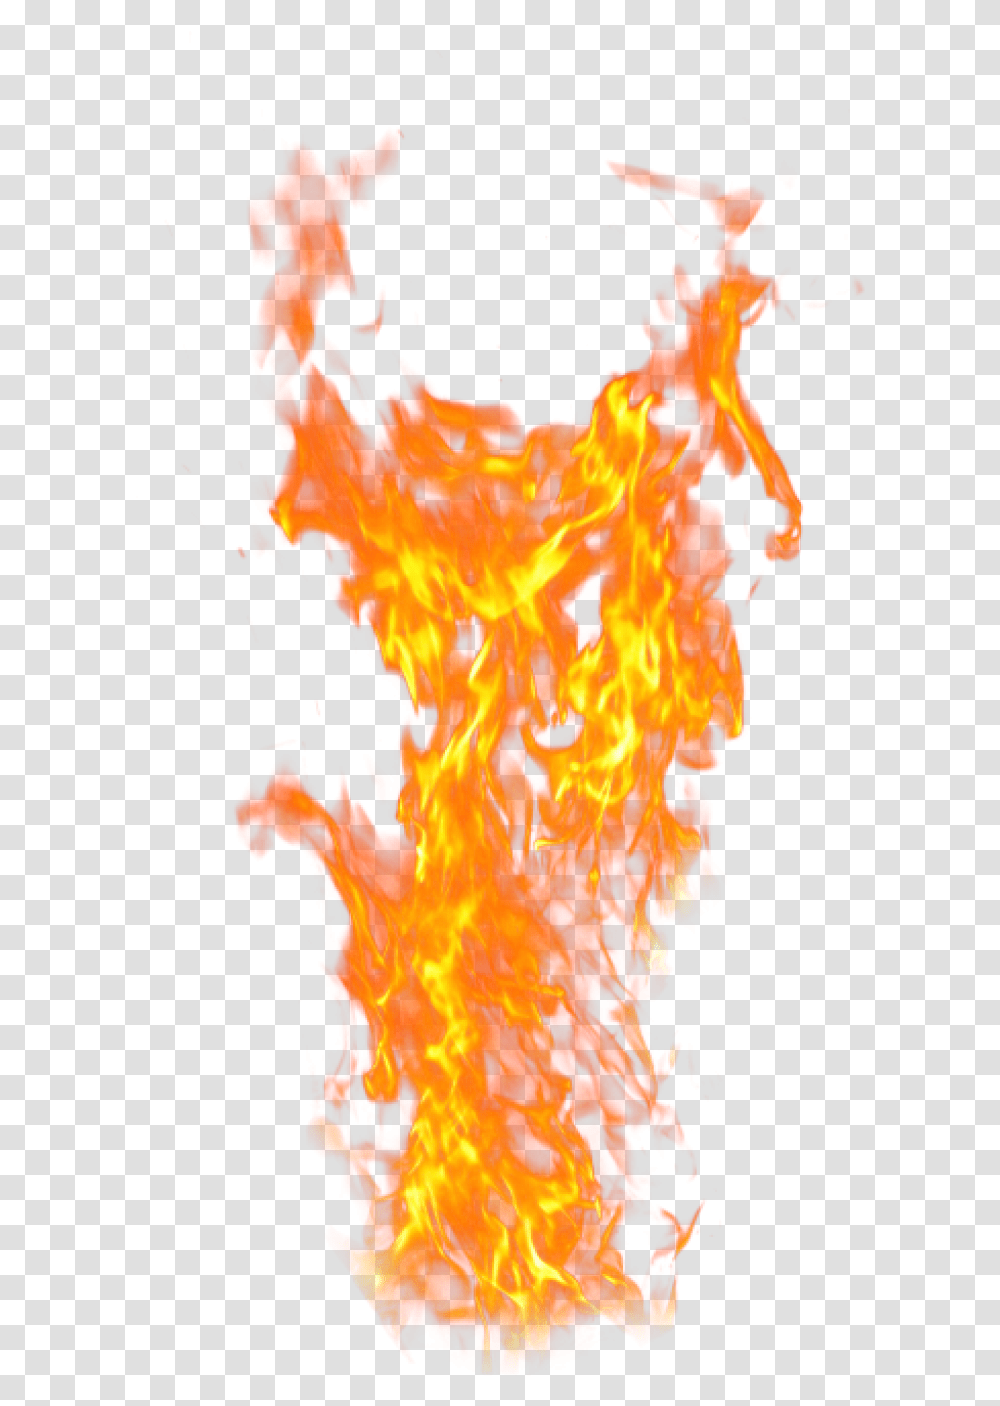 Bright Big Fire Flame Image Flame, Bonfire Transparent Png